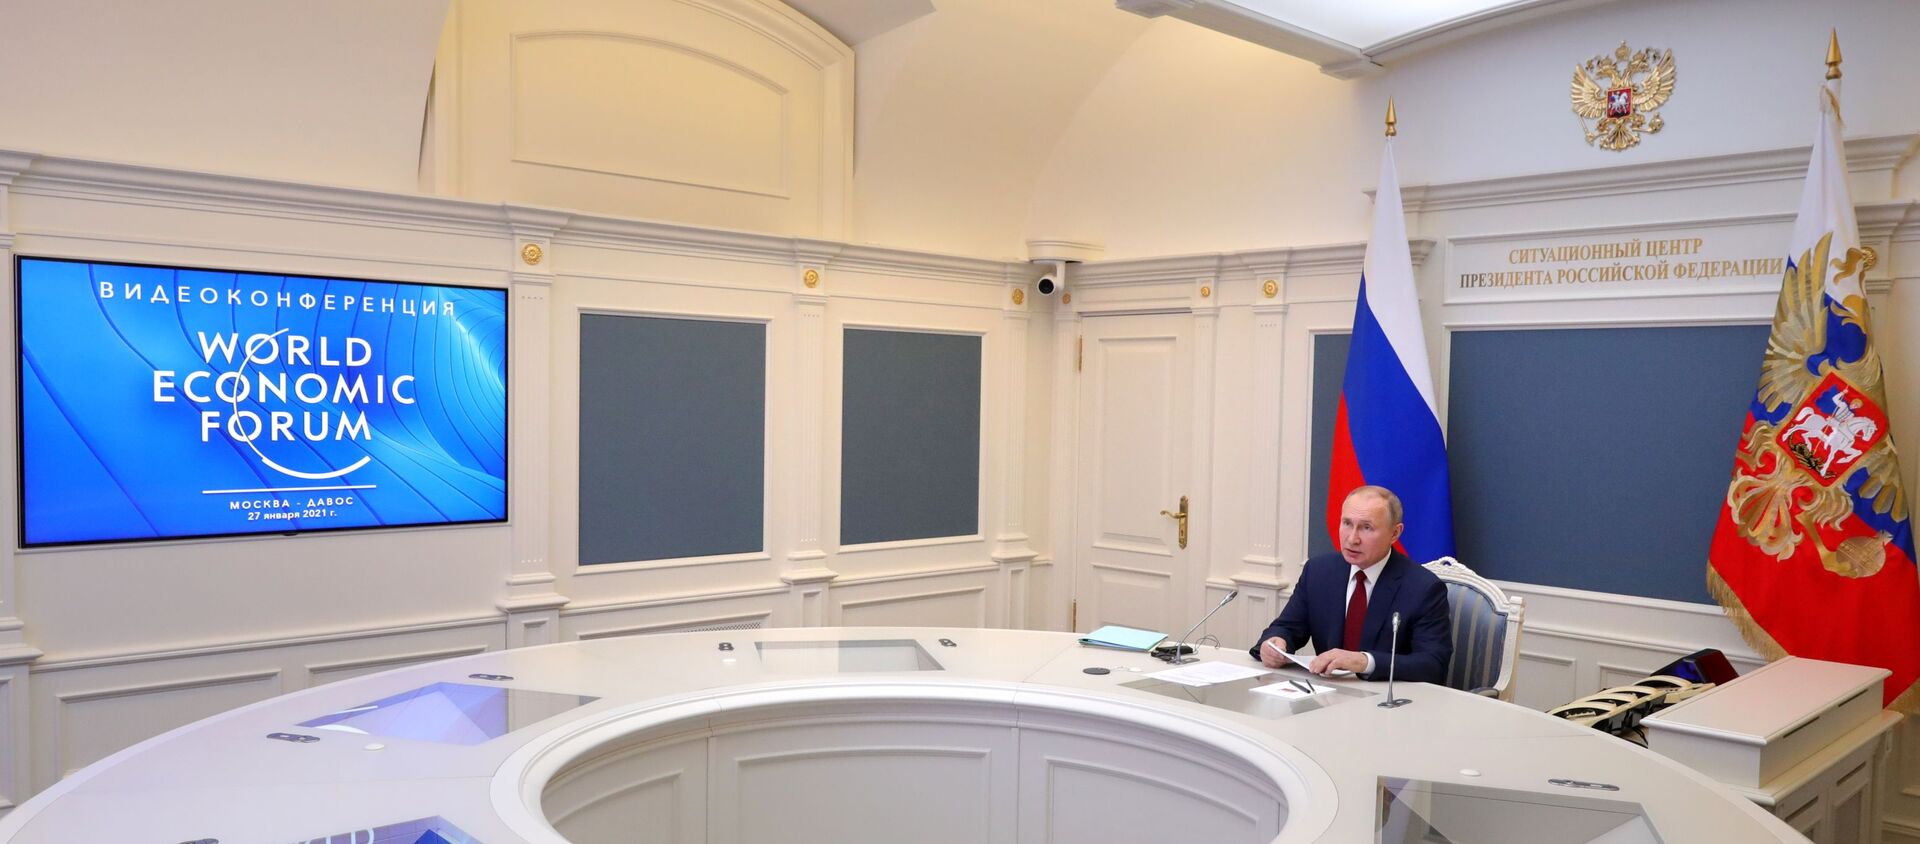 Президент РФ В. Путин выступил на сессии онлайн-форума Давосская повестка дня 2021 - Sputnik Абхазия, 1920, 28.01.2021